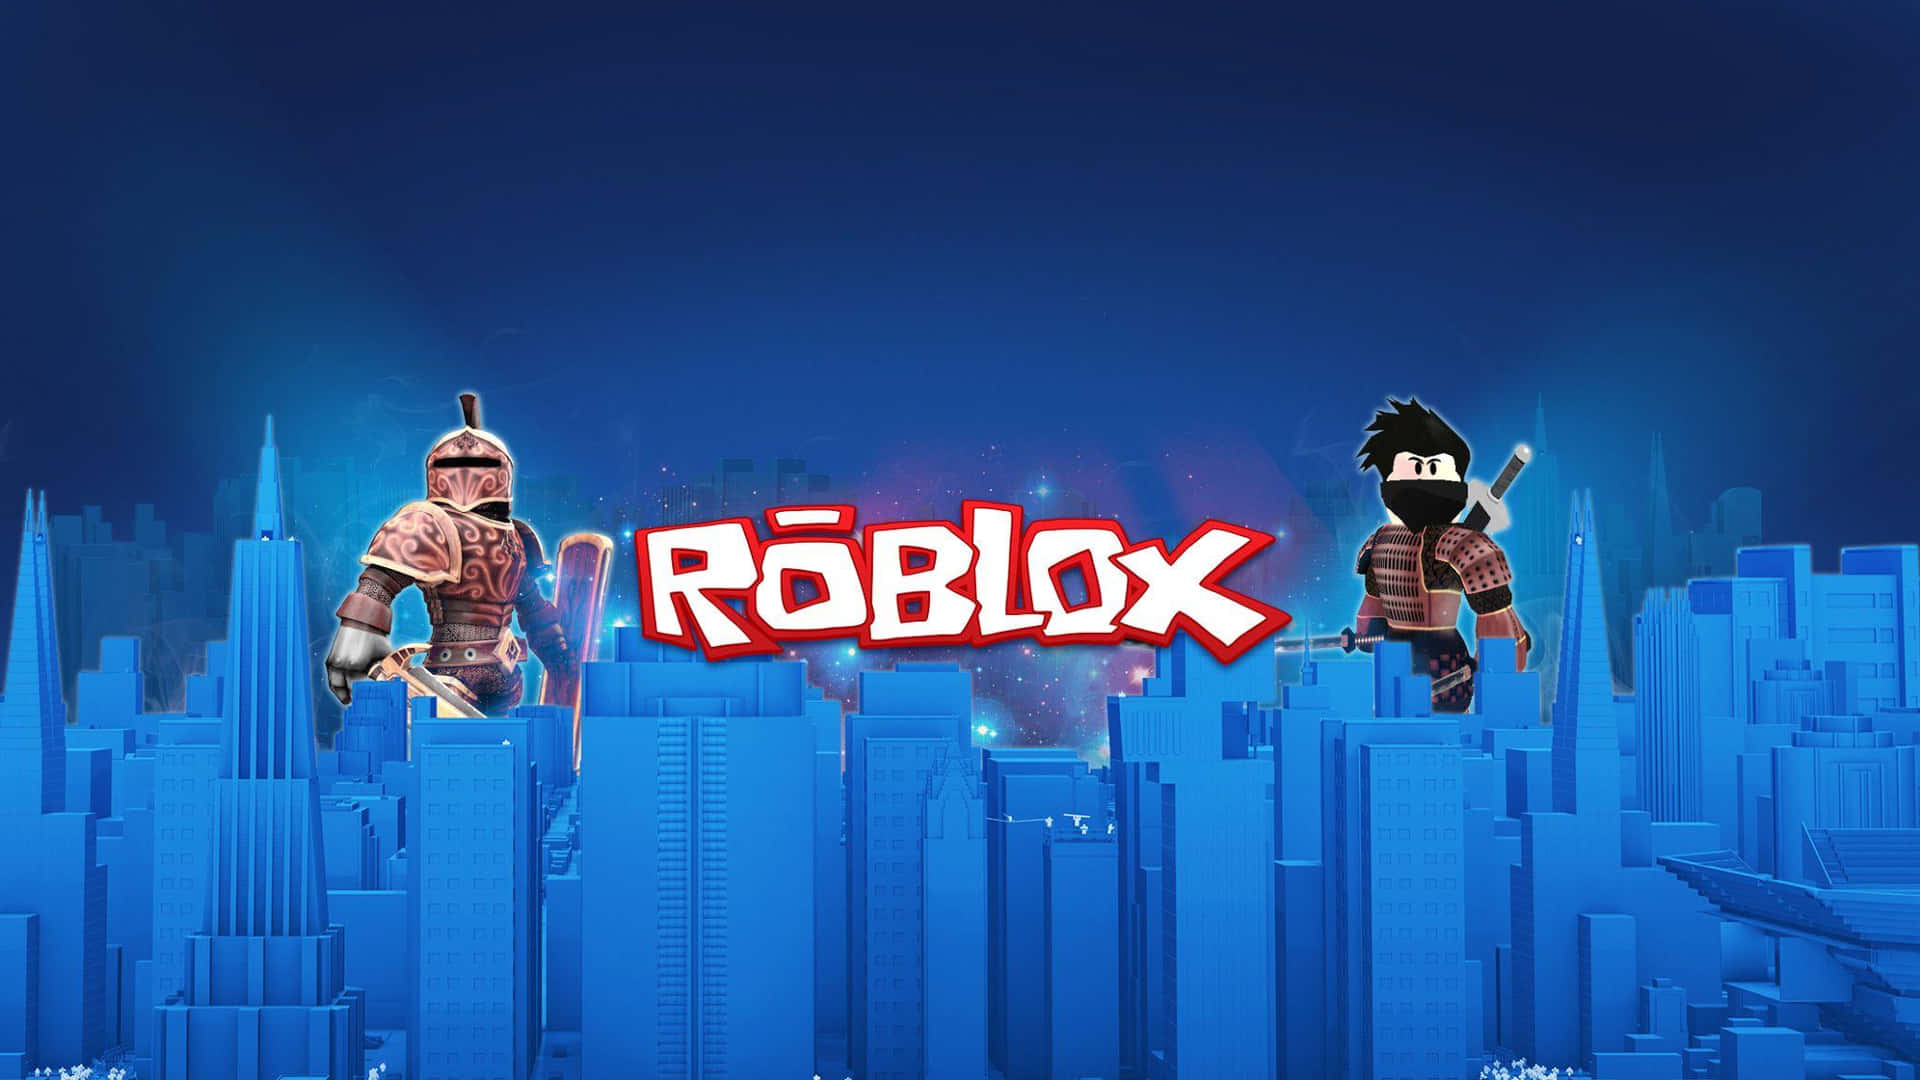 Download A Roblox Boy Enjoying His Favourite Game Wallpaper